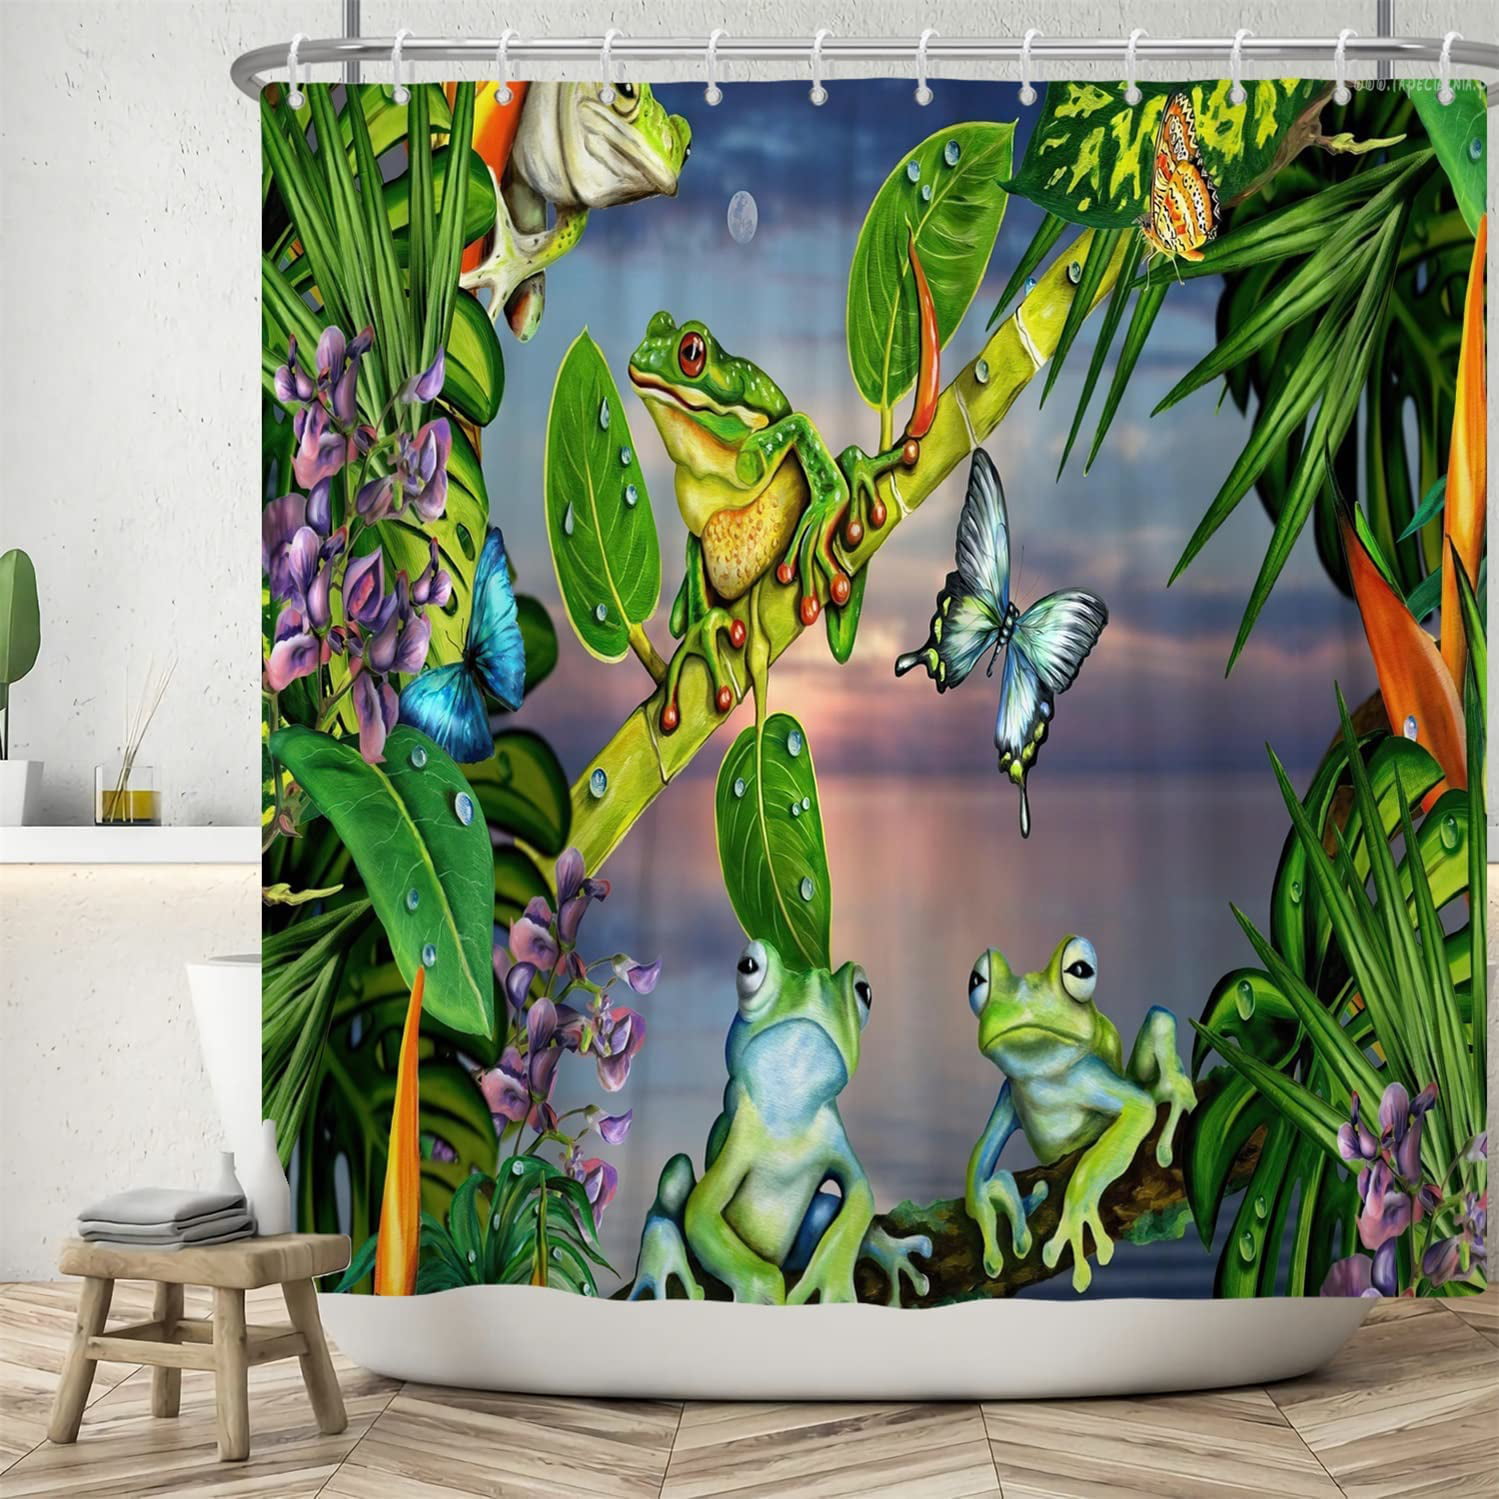 Chictie Set of 12 Frog Shower Curtain Hooks Stainless Steel Cartoon  Decorative Bathroom Hanger Rings Kids Favorite Animal Green Home Decor